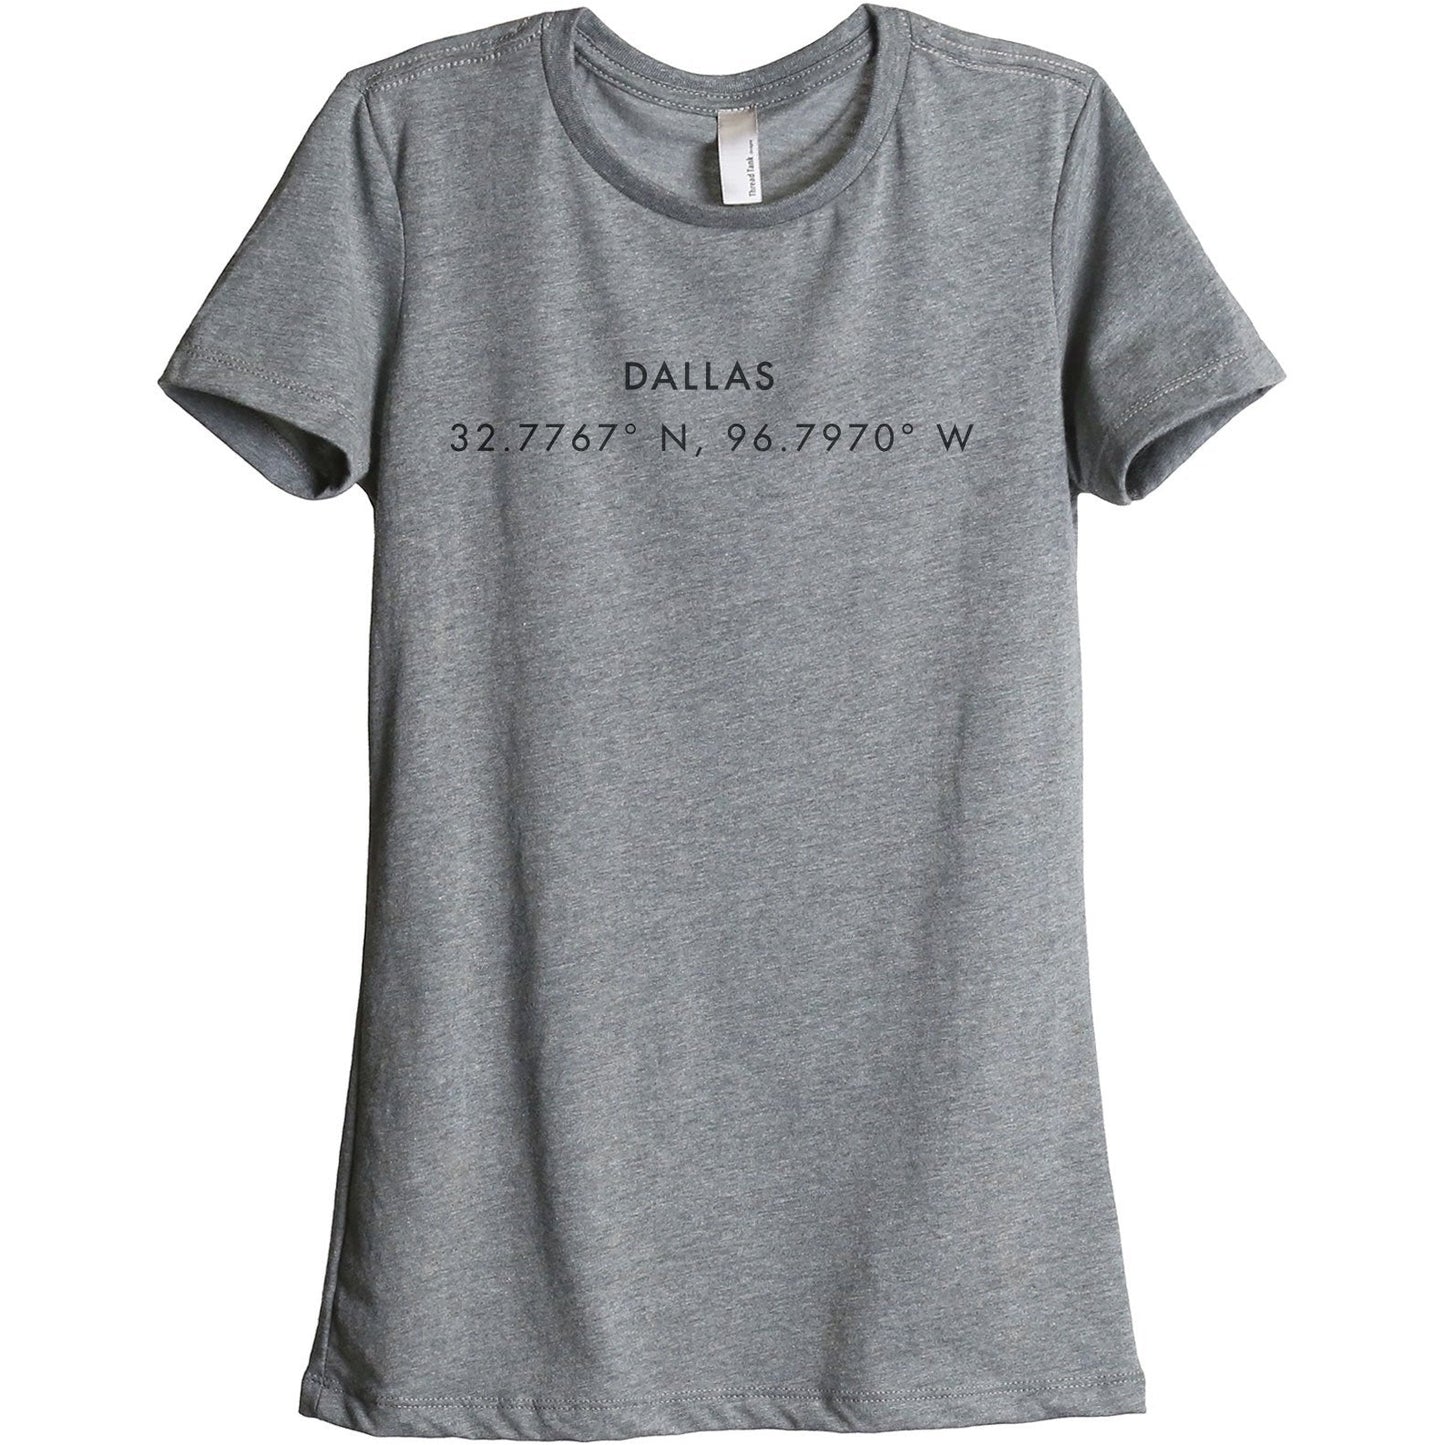 Dallas Texas Coordinates Women's Relaxed Crewneck T-Shirt Top Tee Heather Grey